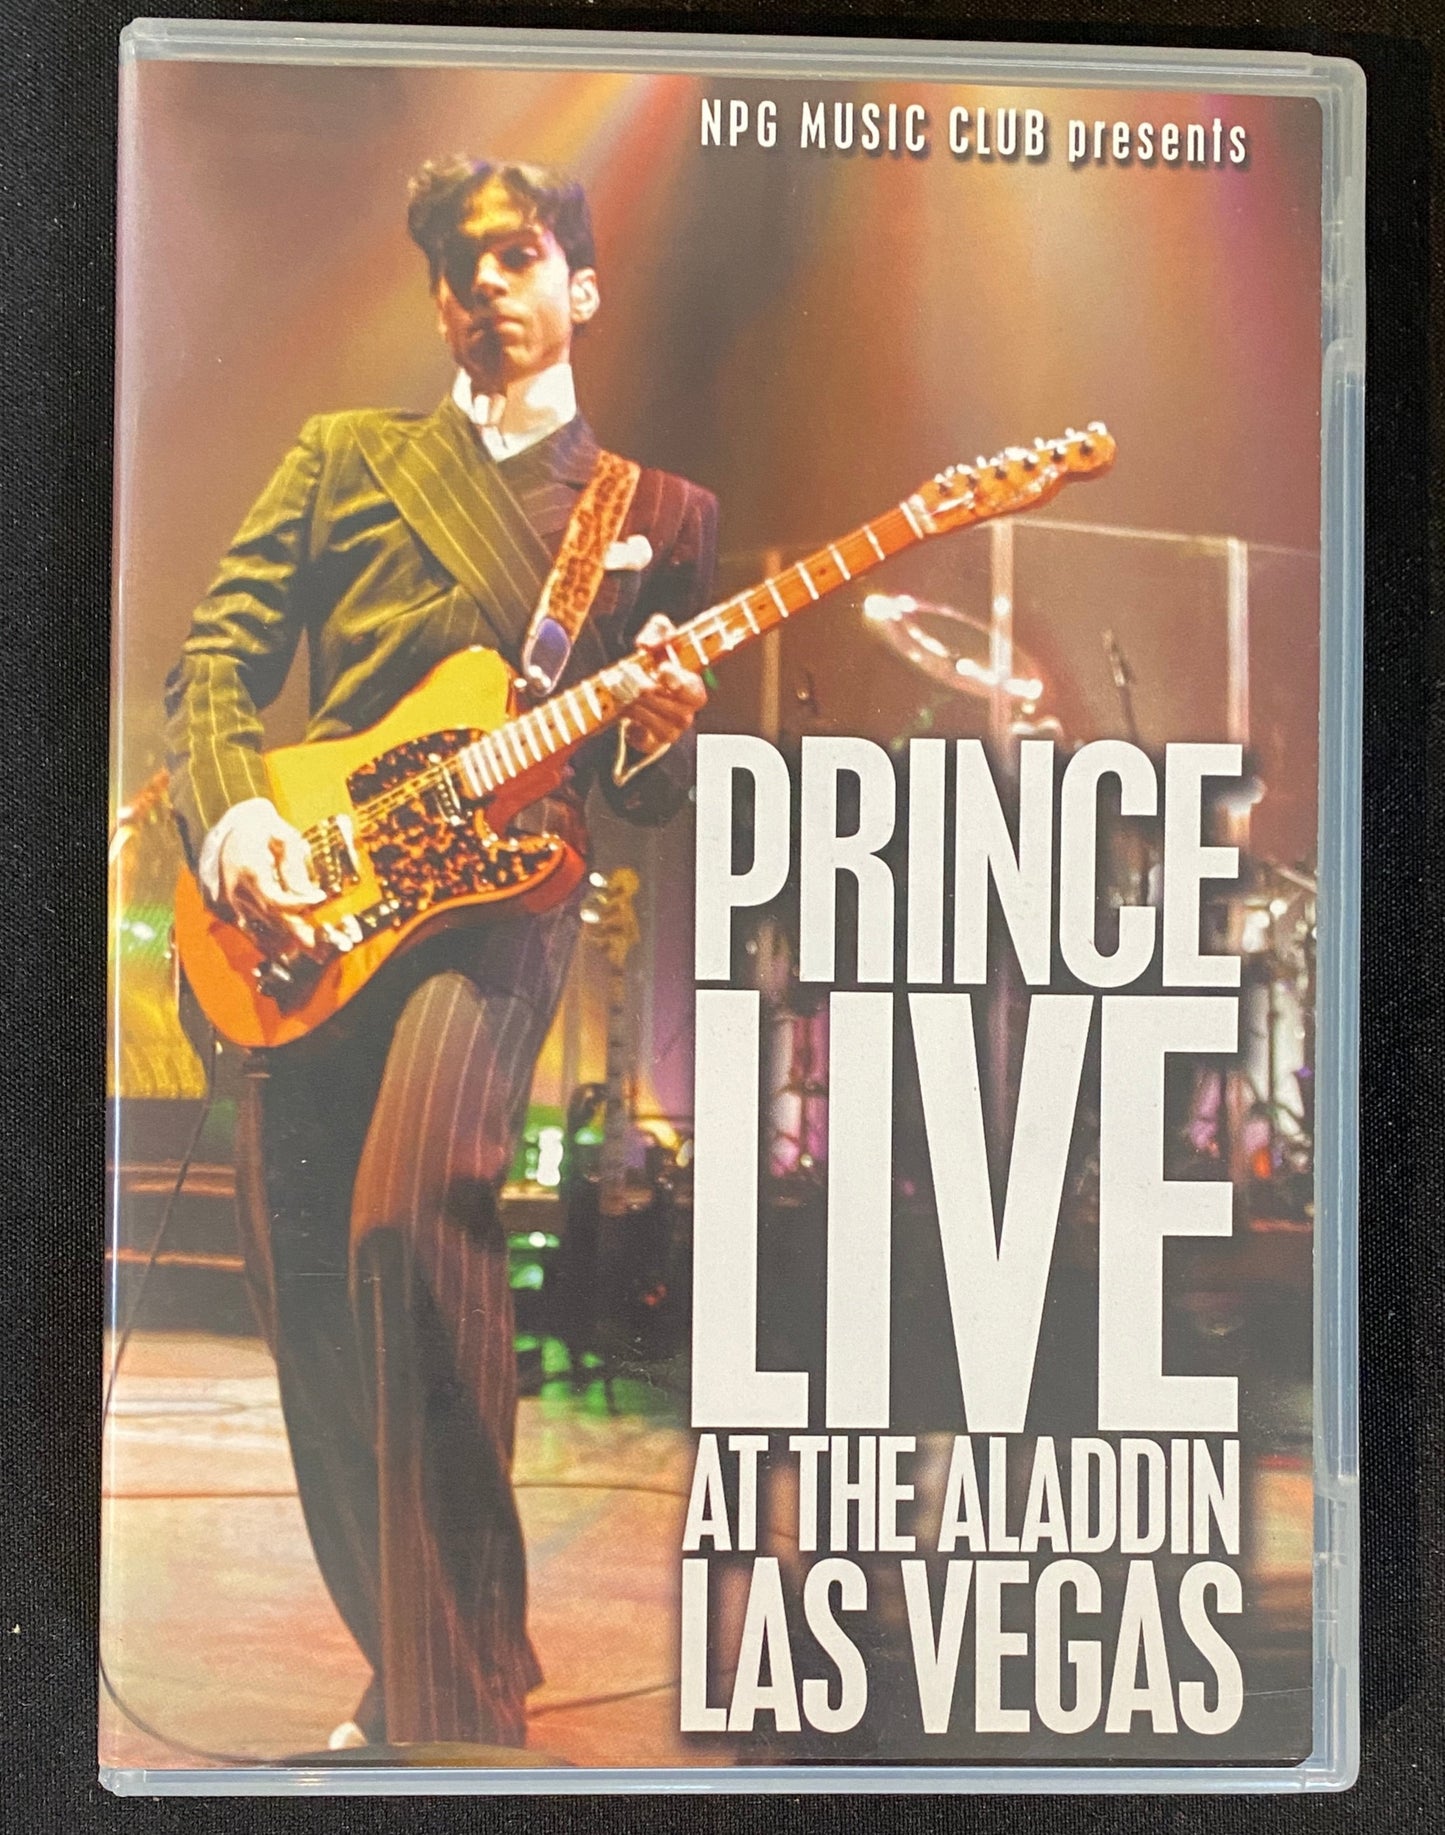 Prince - Live at the Aladdin Las Vegas